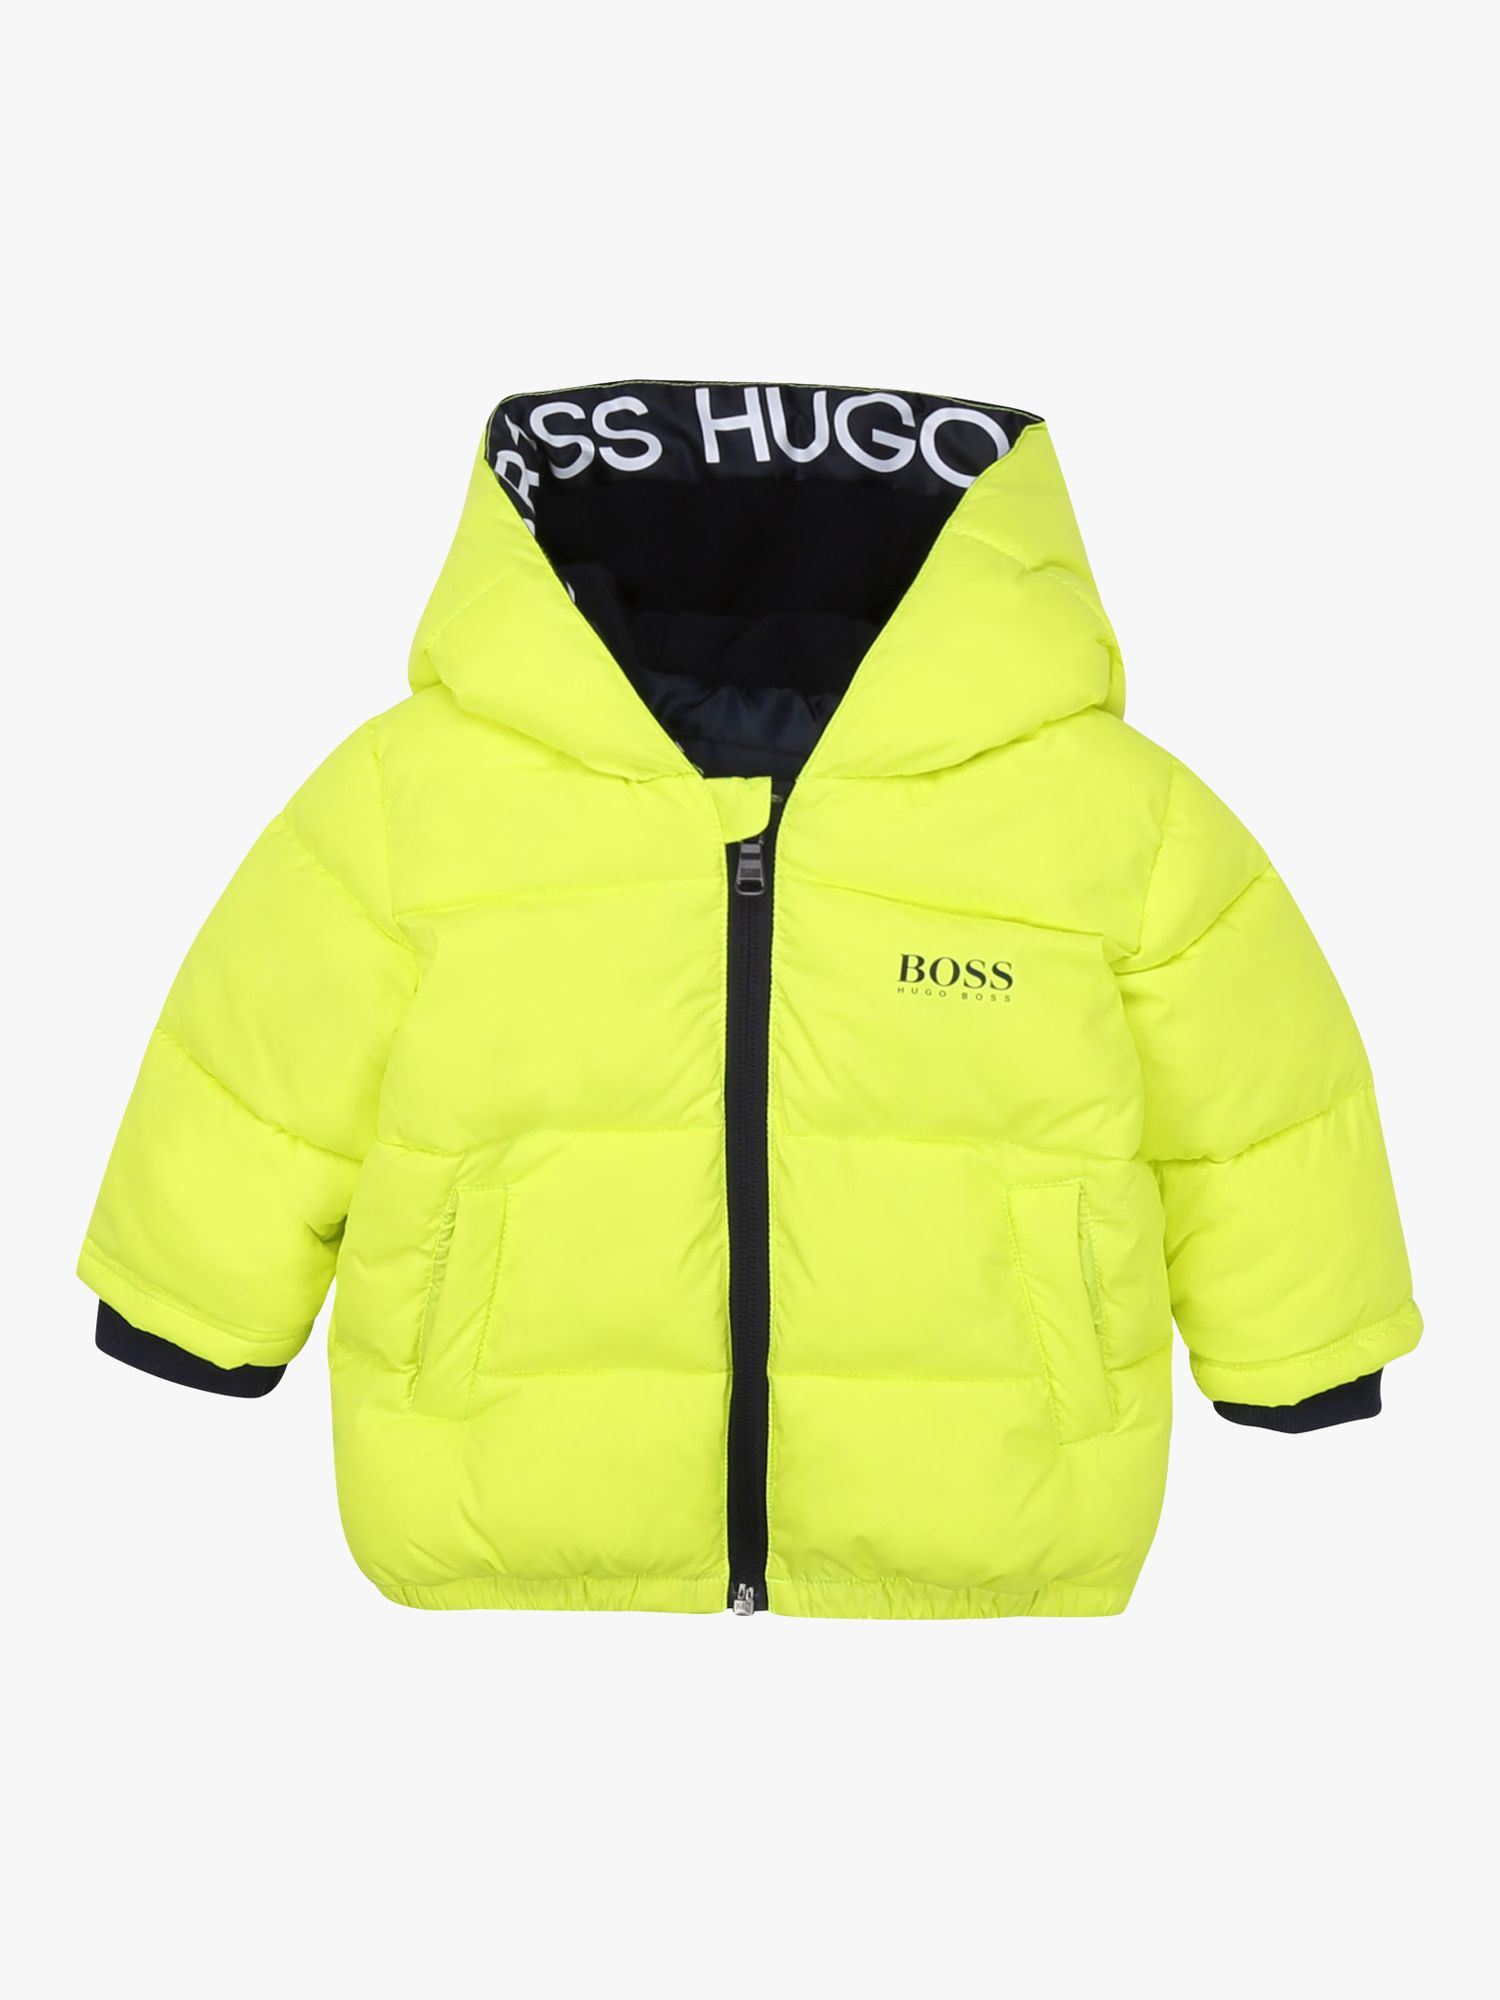 hugo boss baby coat